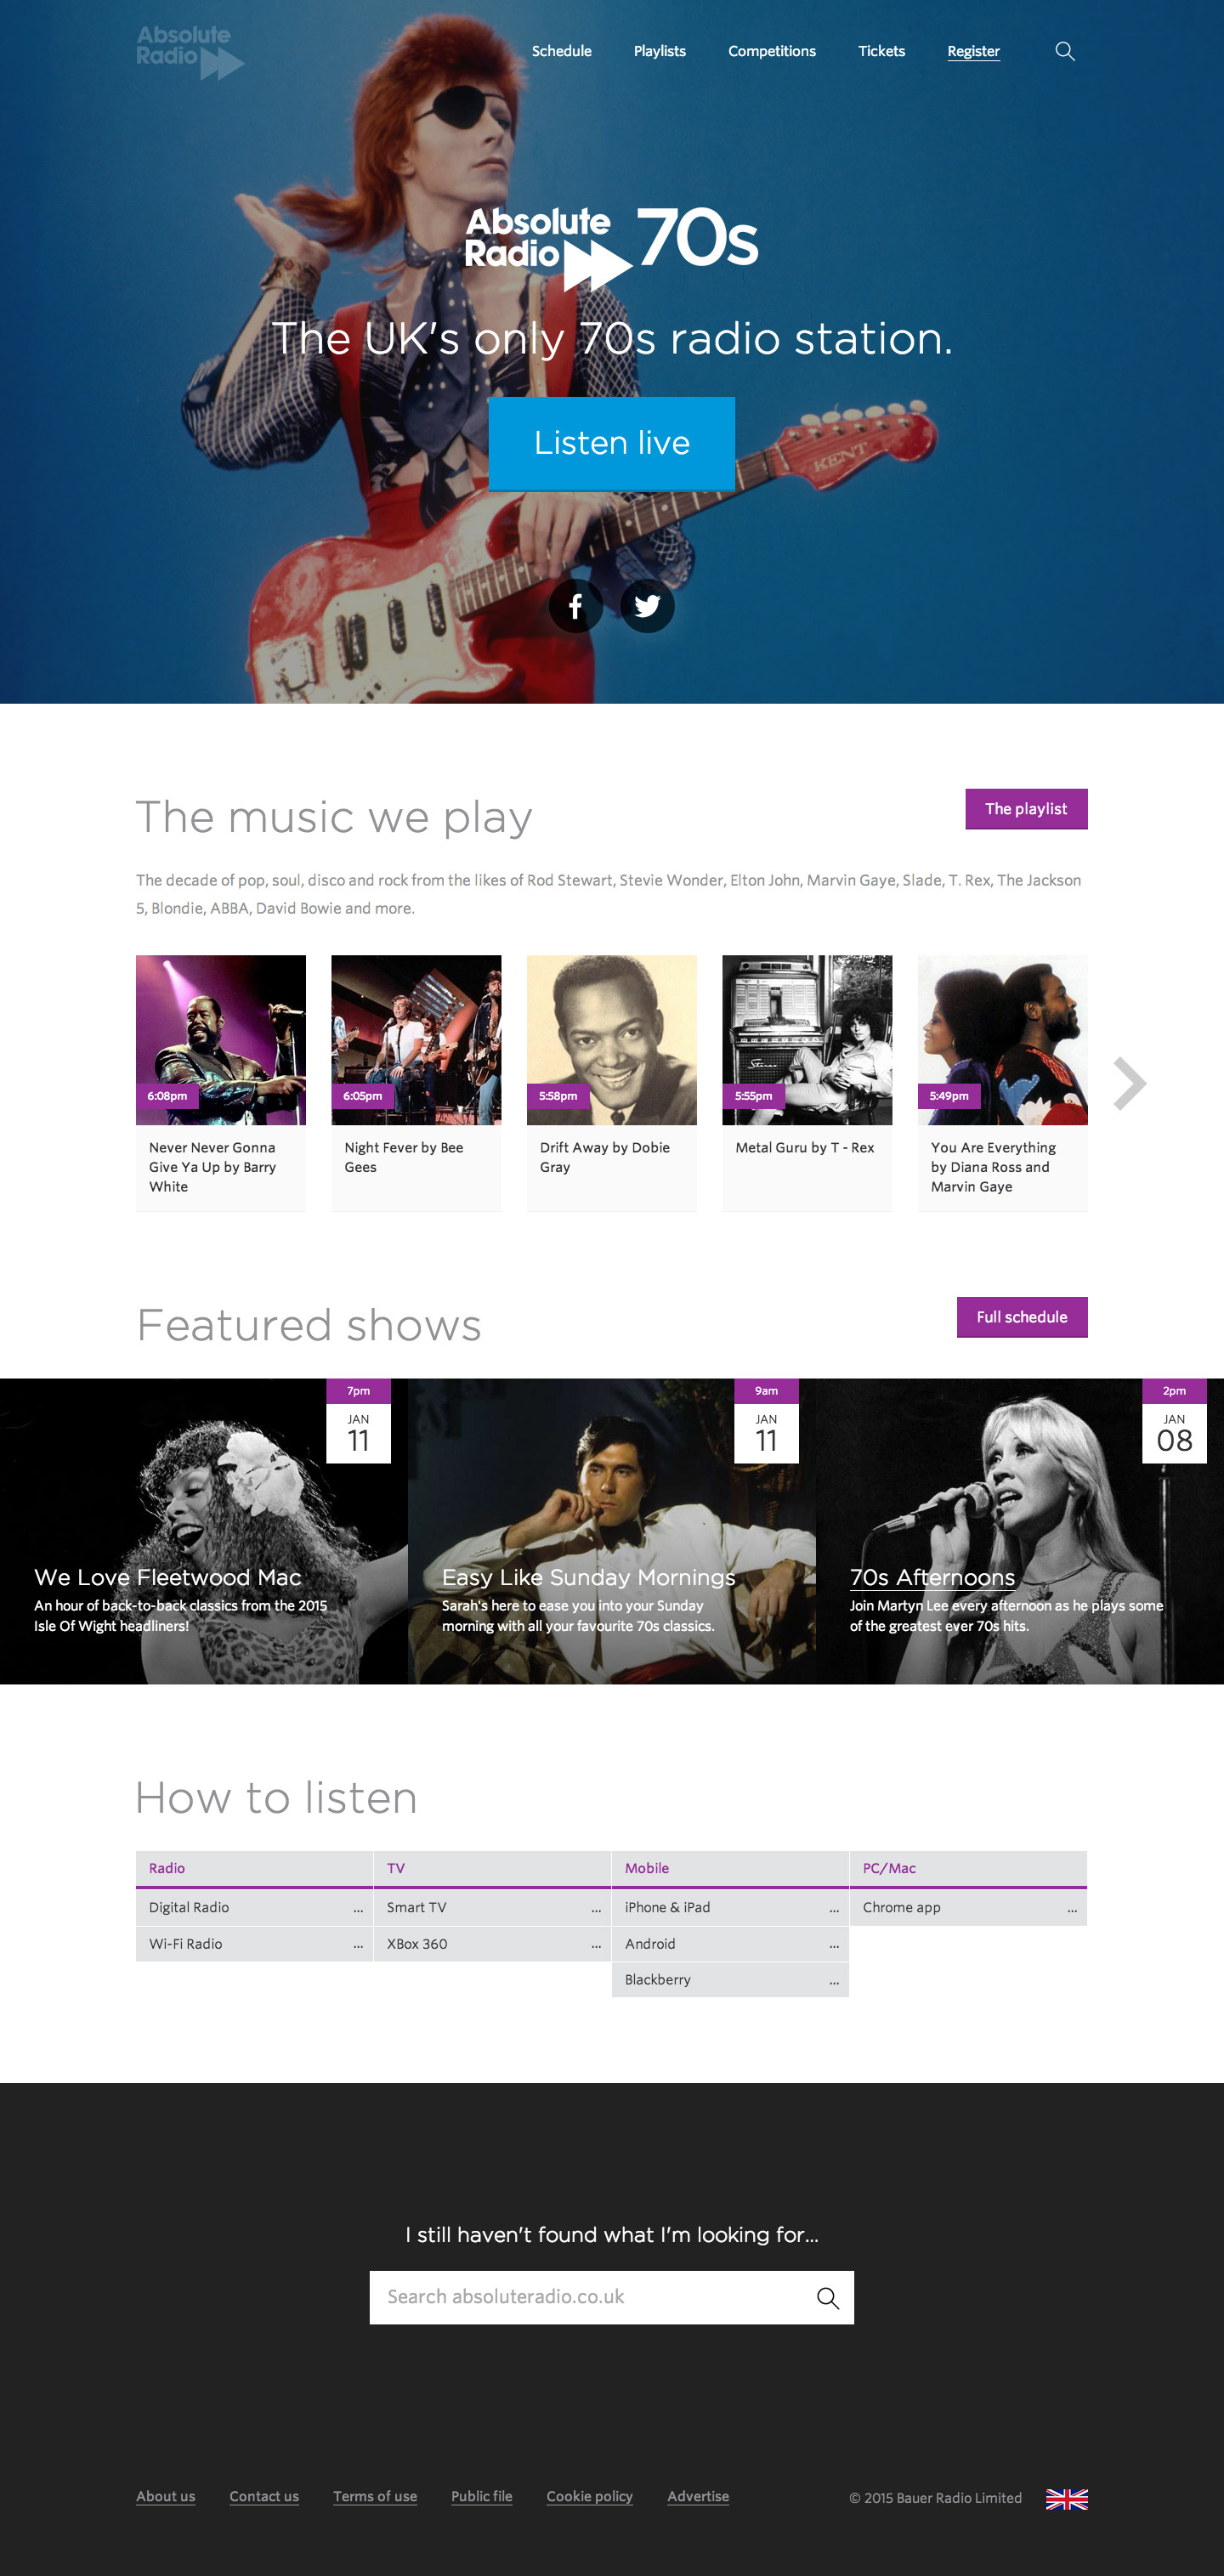 Absolute Radio 70s homepage screenshot